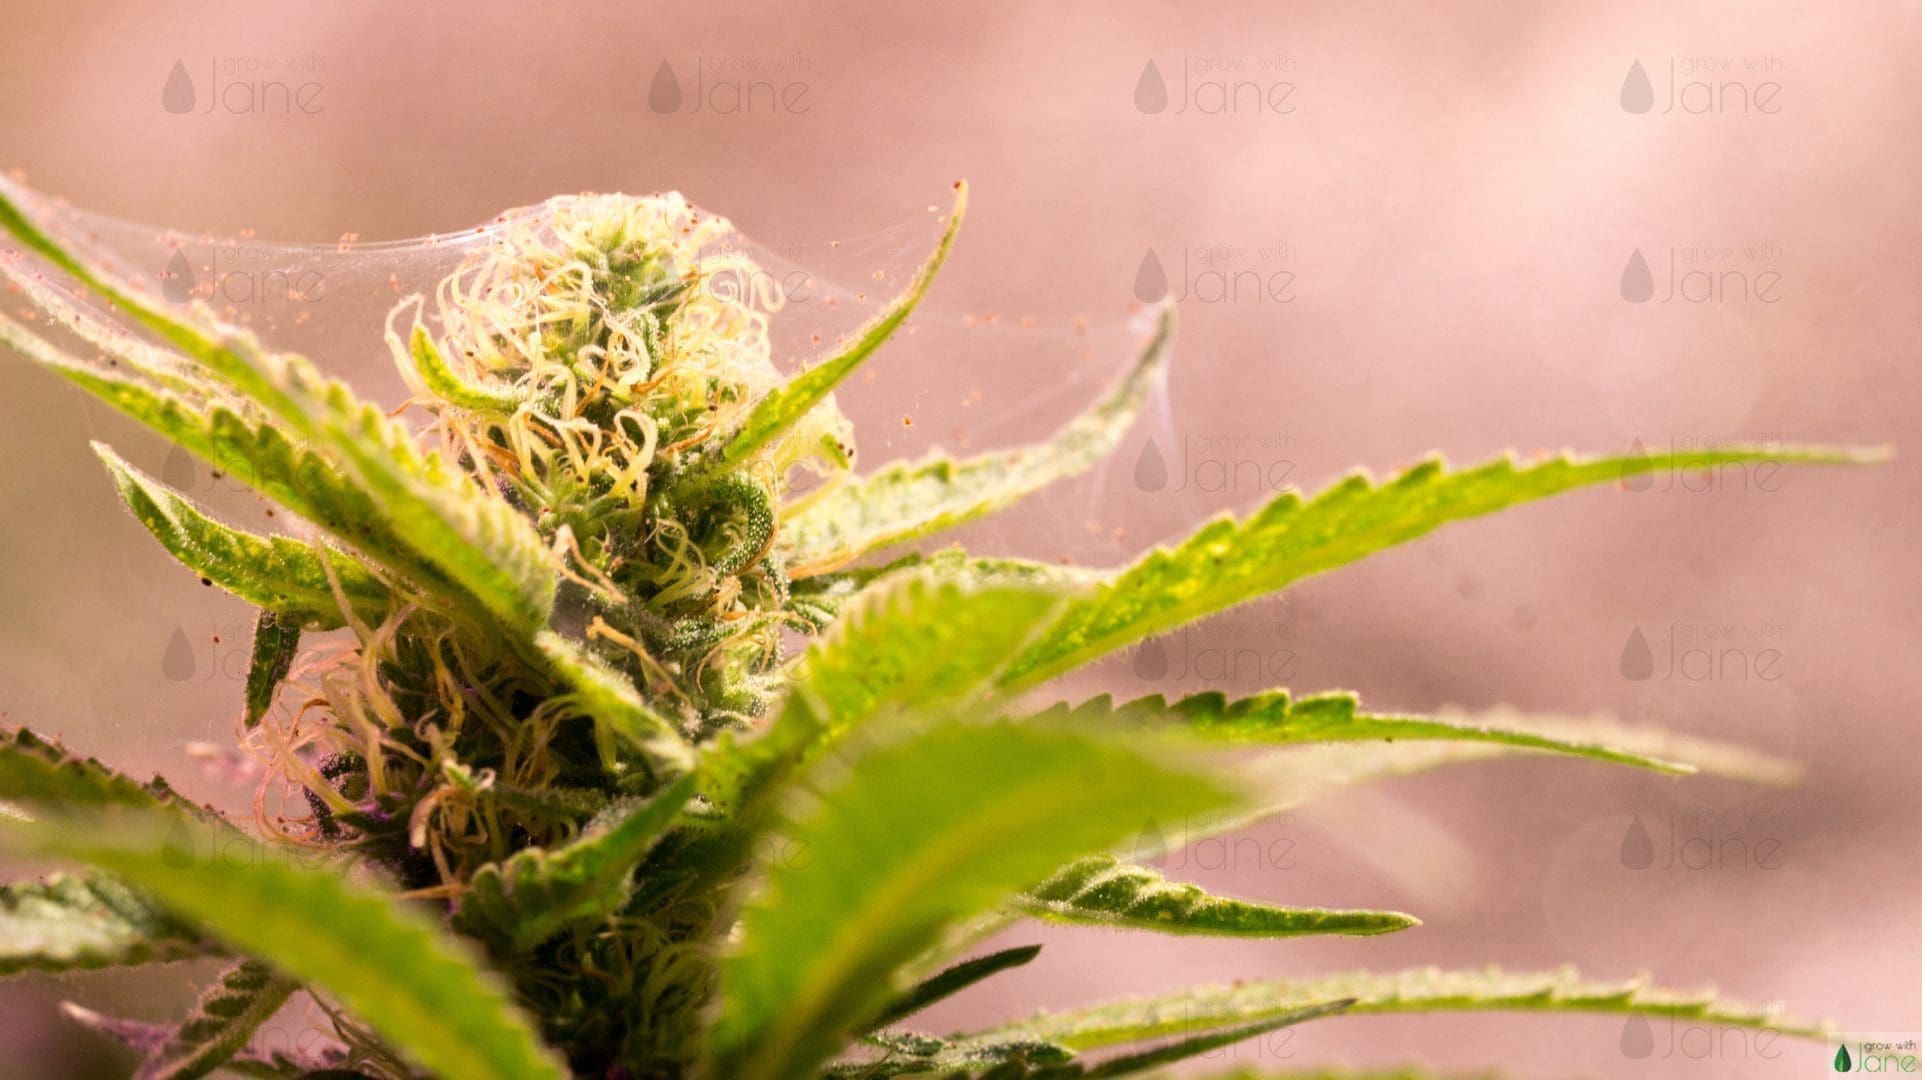 spider mites con cannabis grow with jane